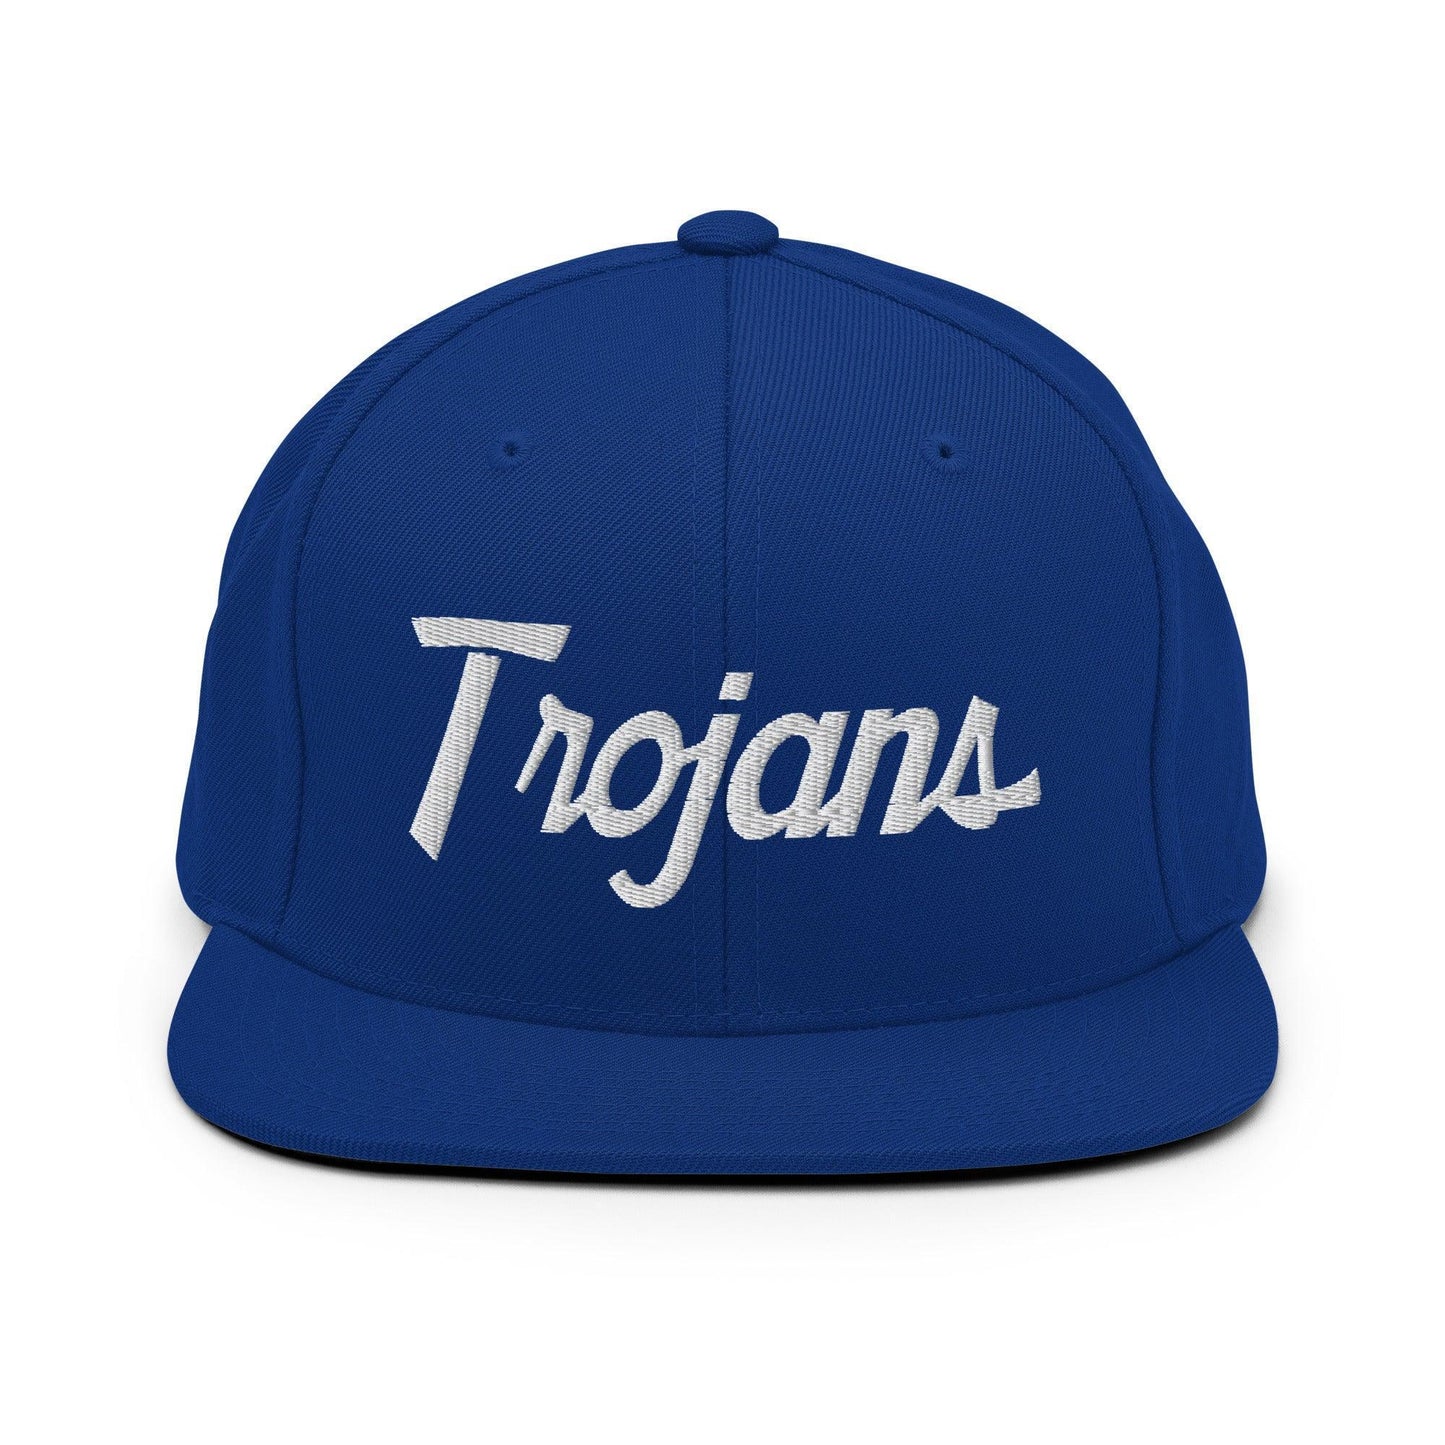 Trojans School Mascot Script Snapback Hat Royal Blue